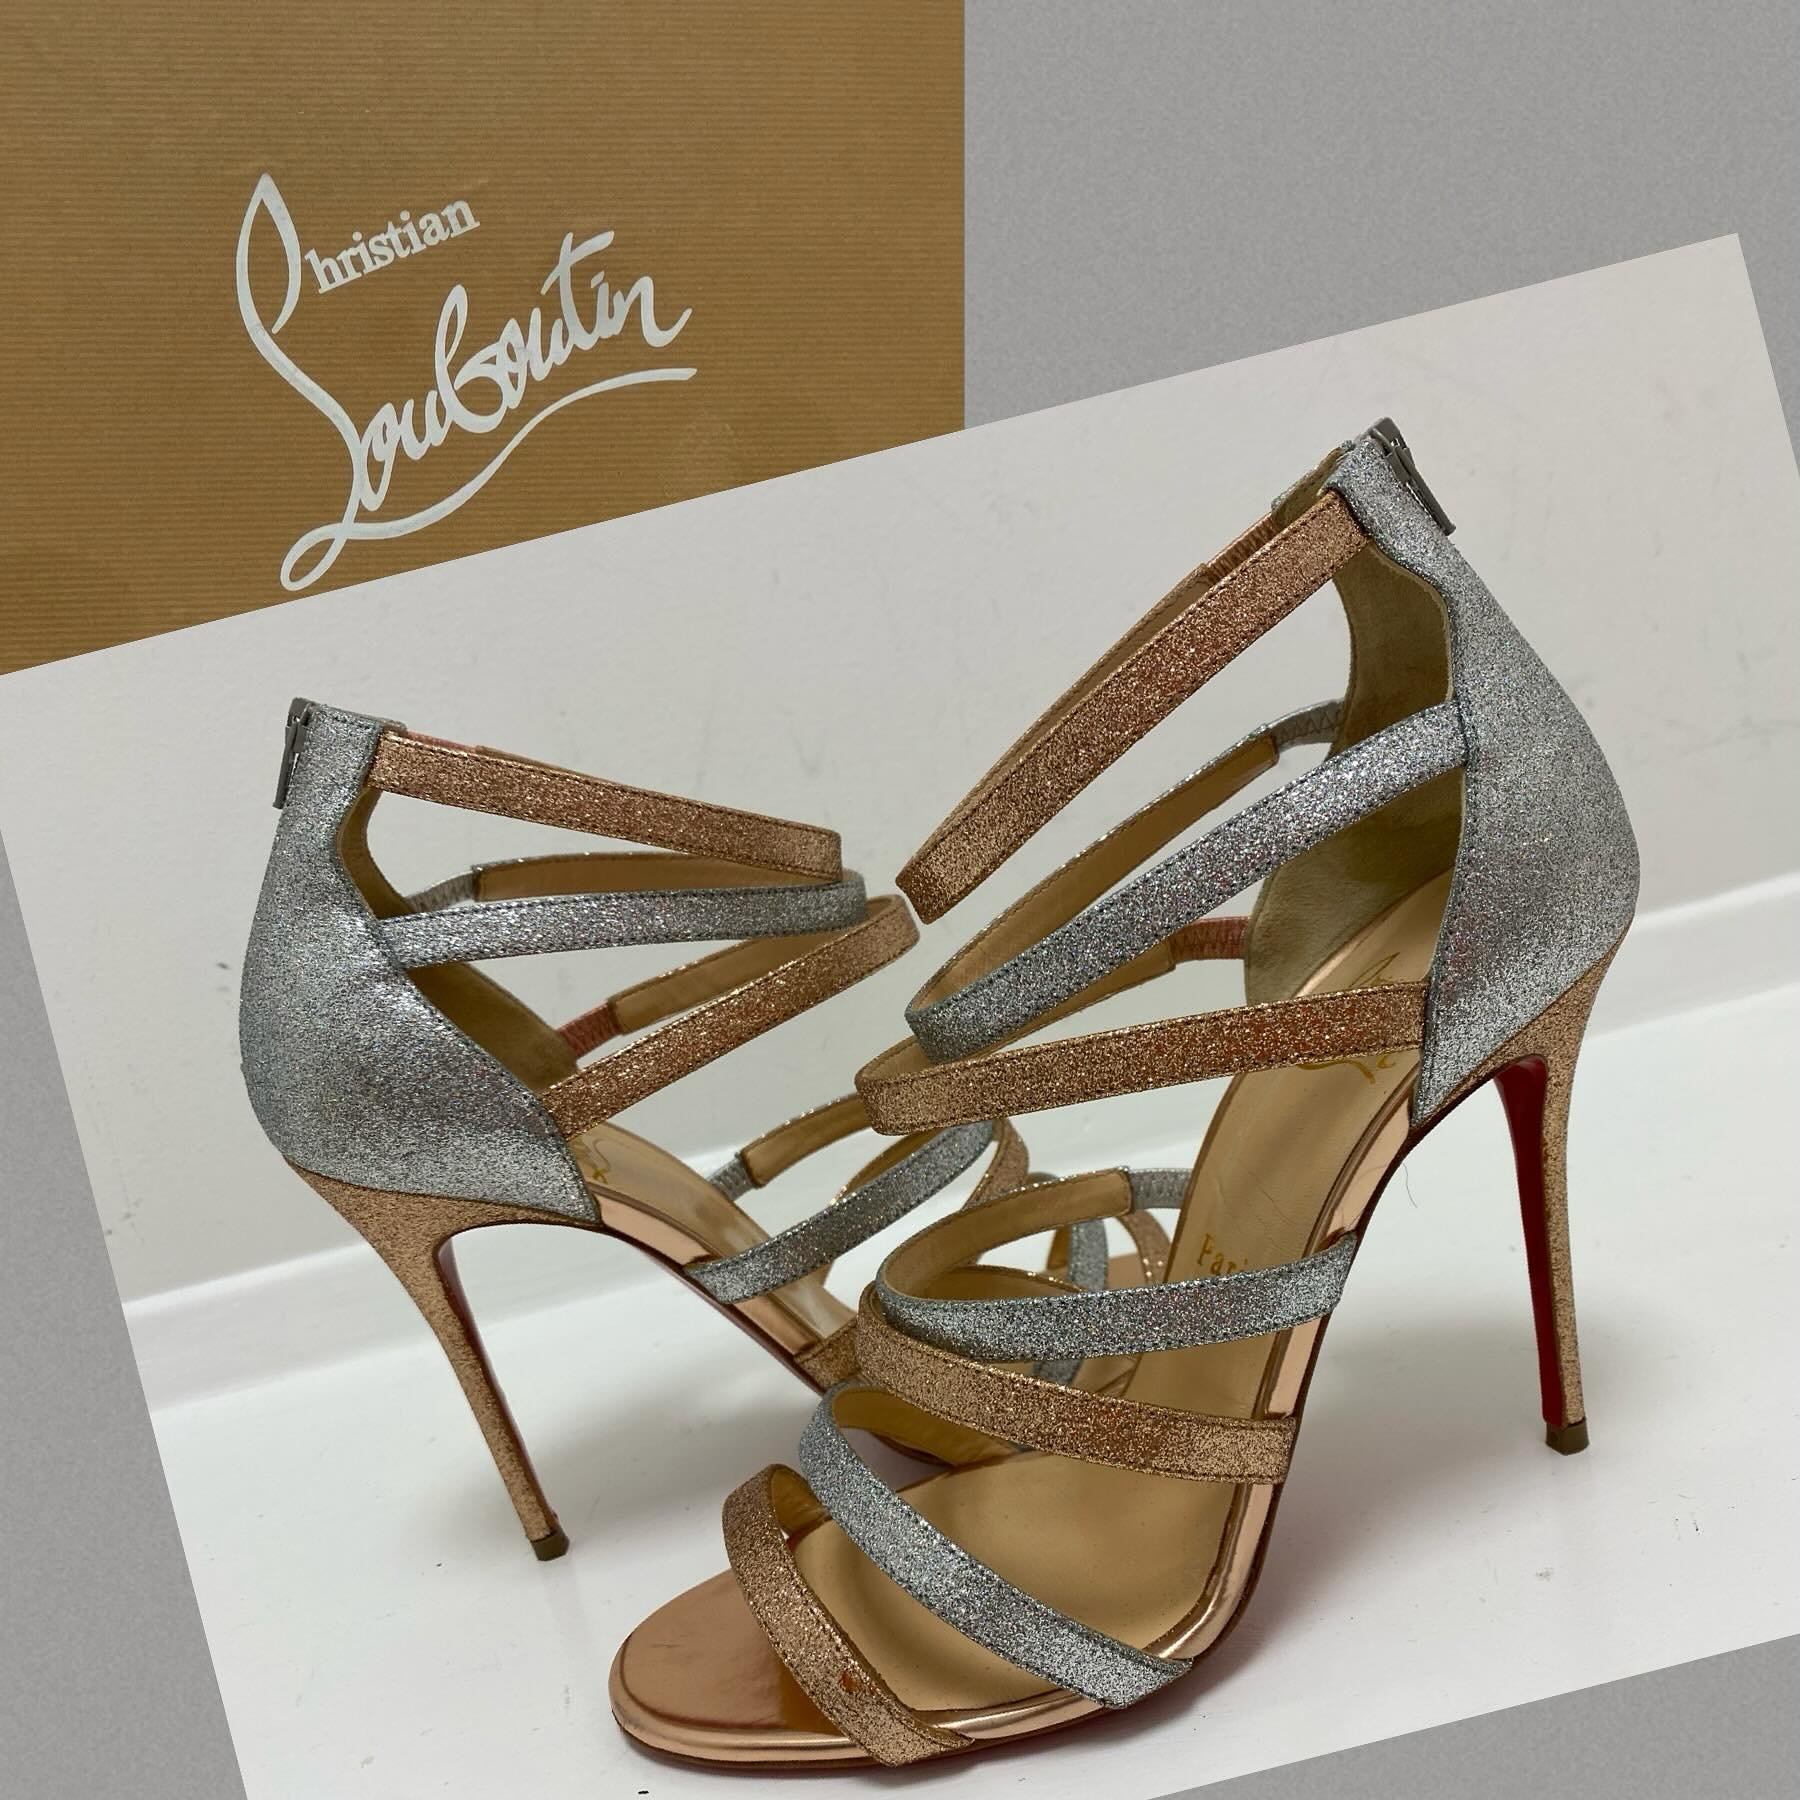 Louboutin Gold/Silver Glitter Sandals Size 38  #louboutin #designersandals #redeuxapparel #shoplocal #consignmentboutique